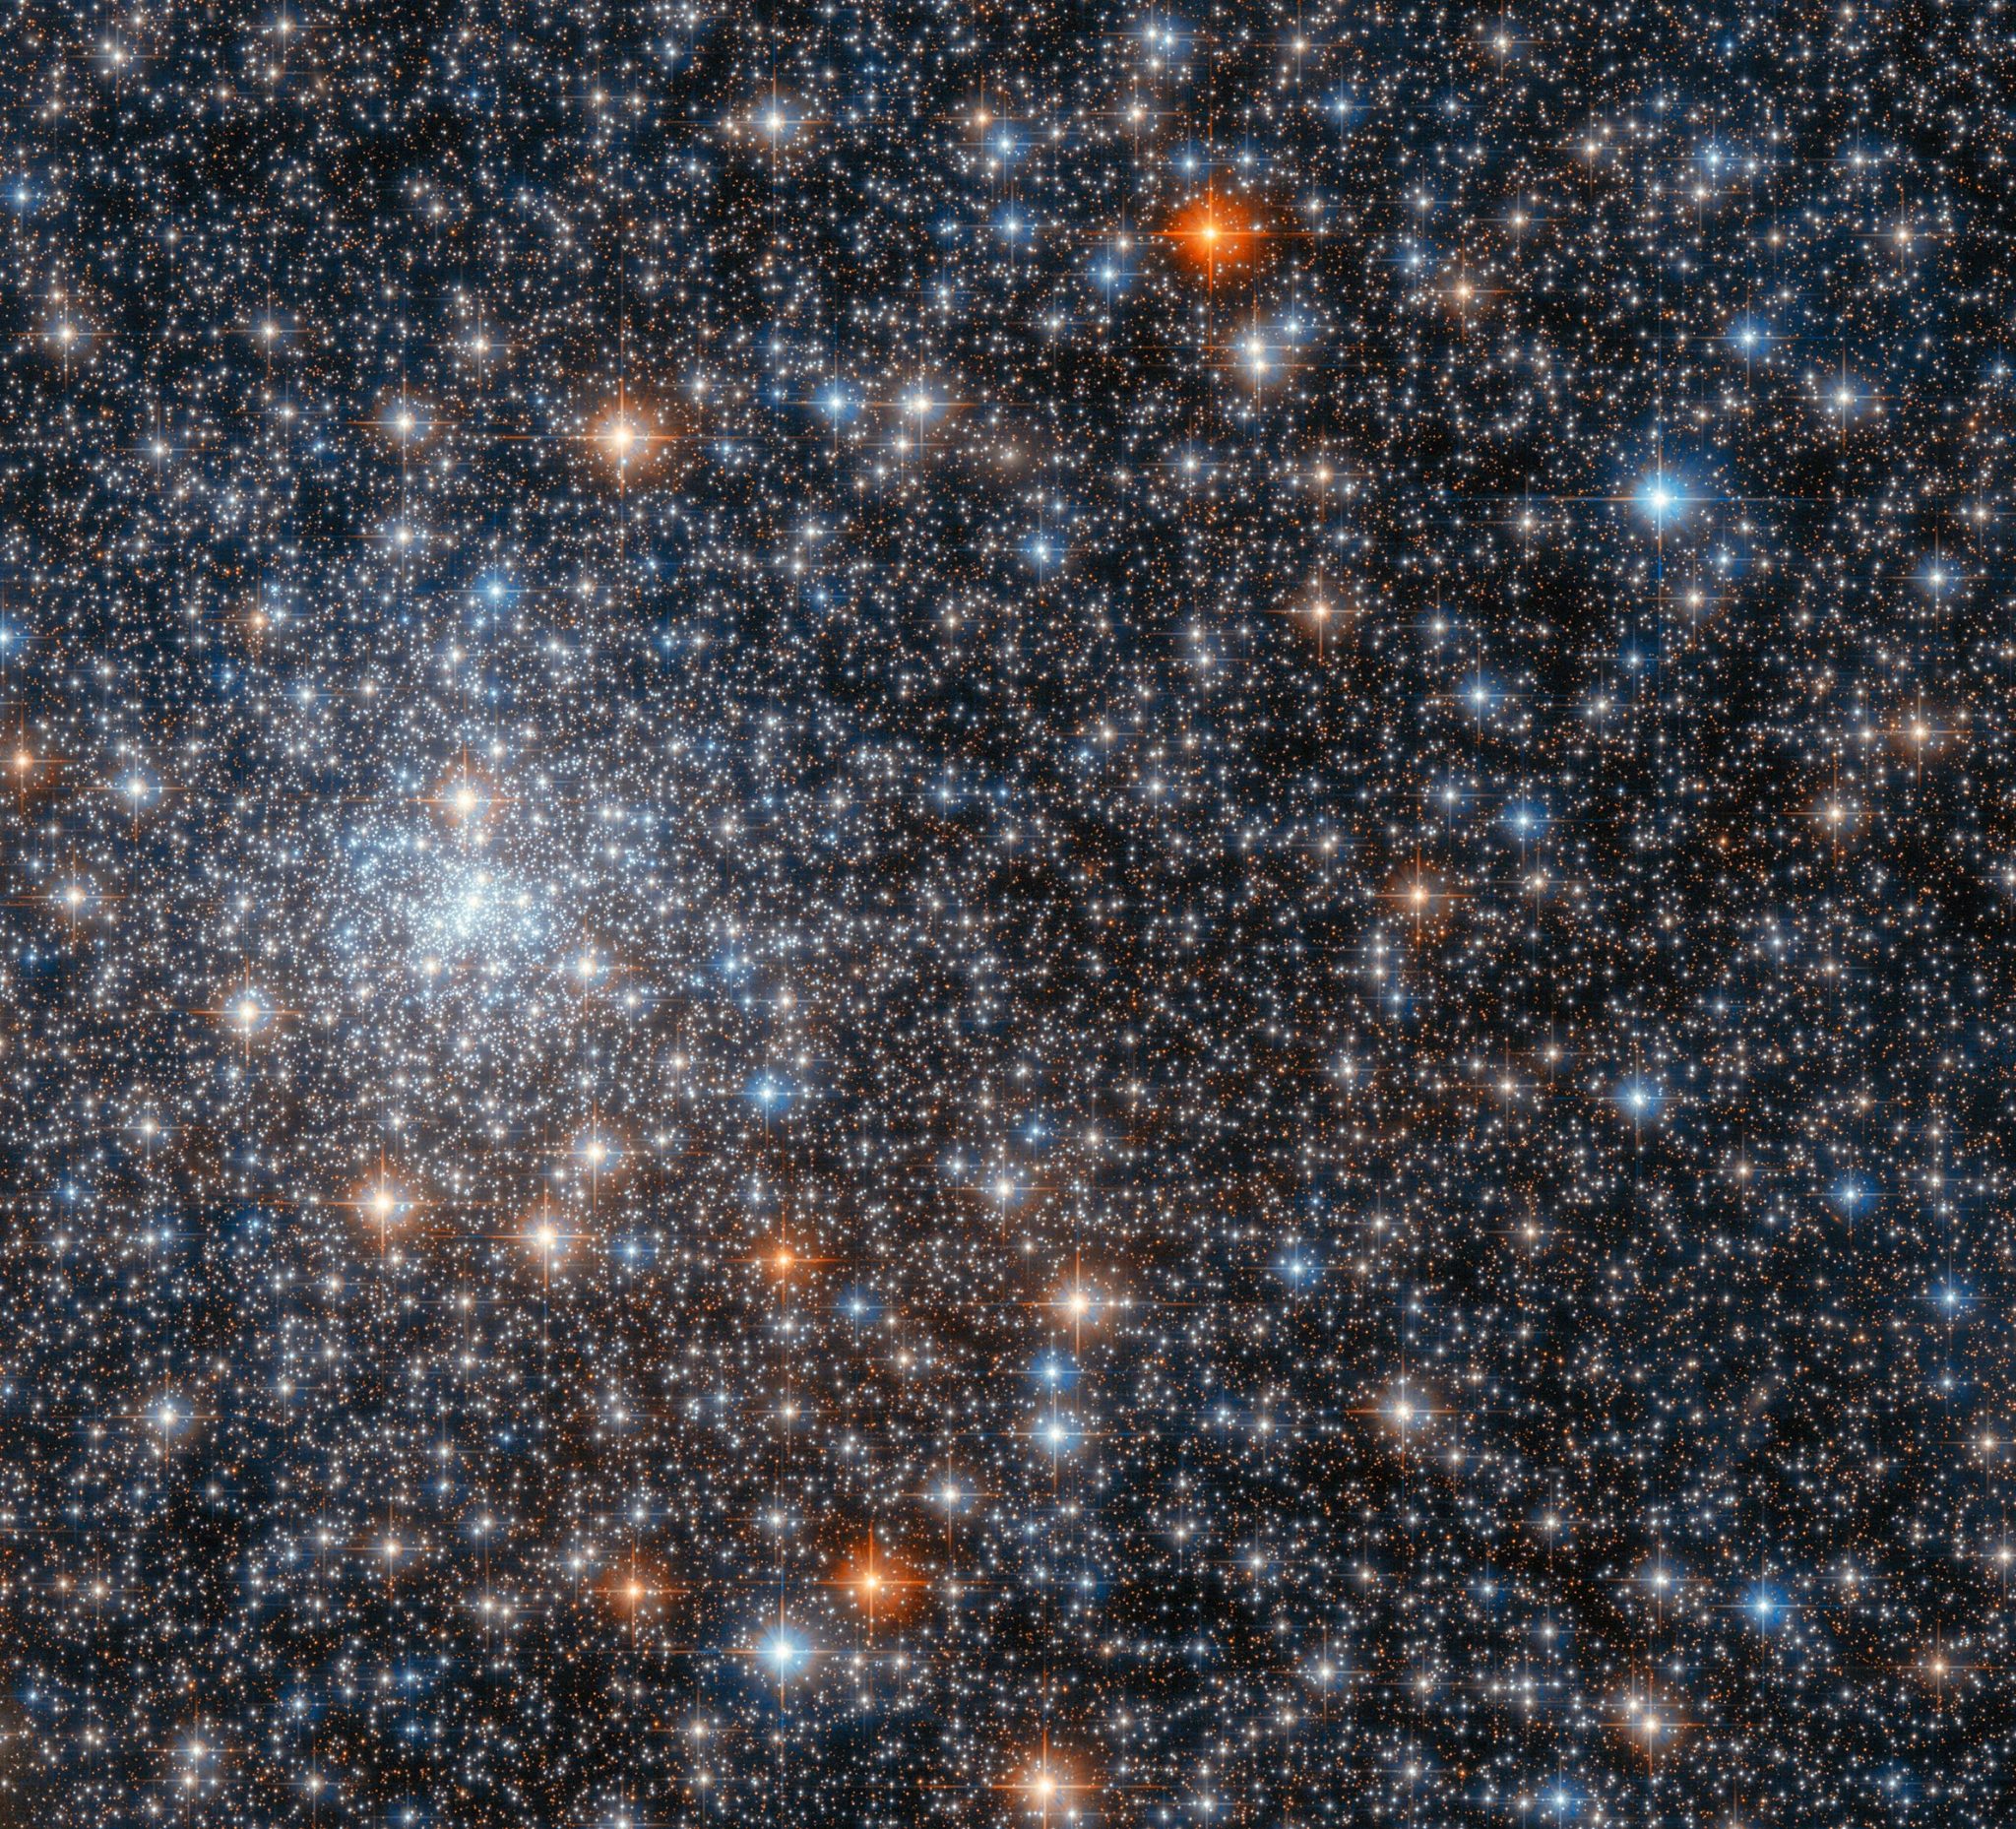 Hubble espía a un asombroso conjunto de estrellas titilantes